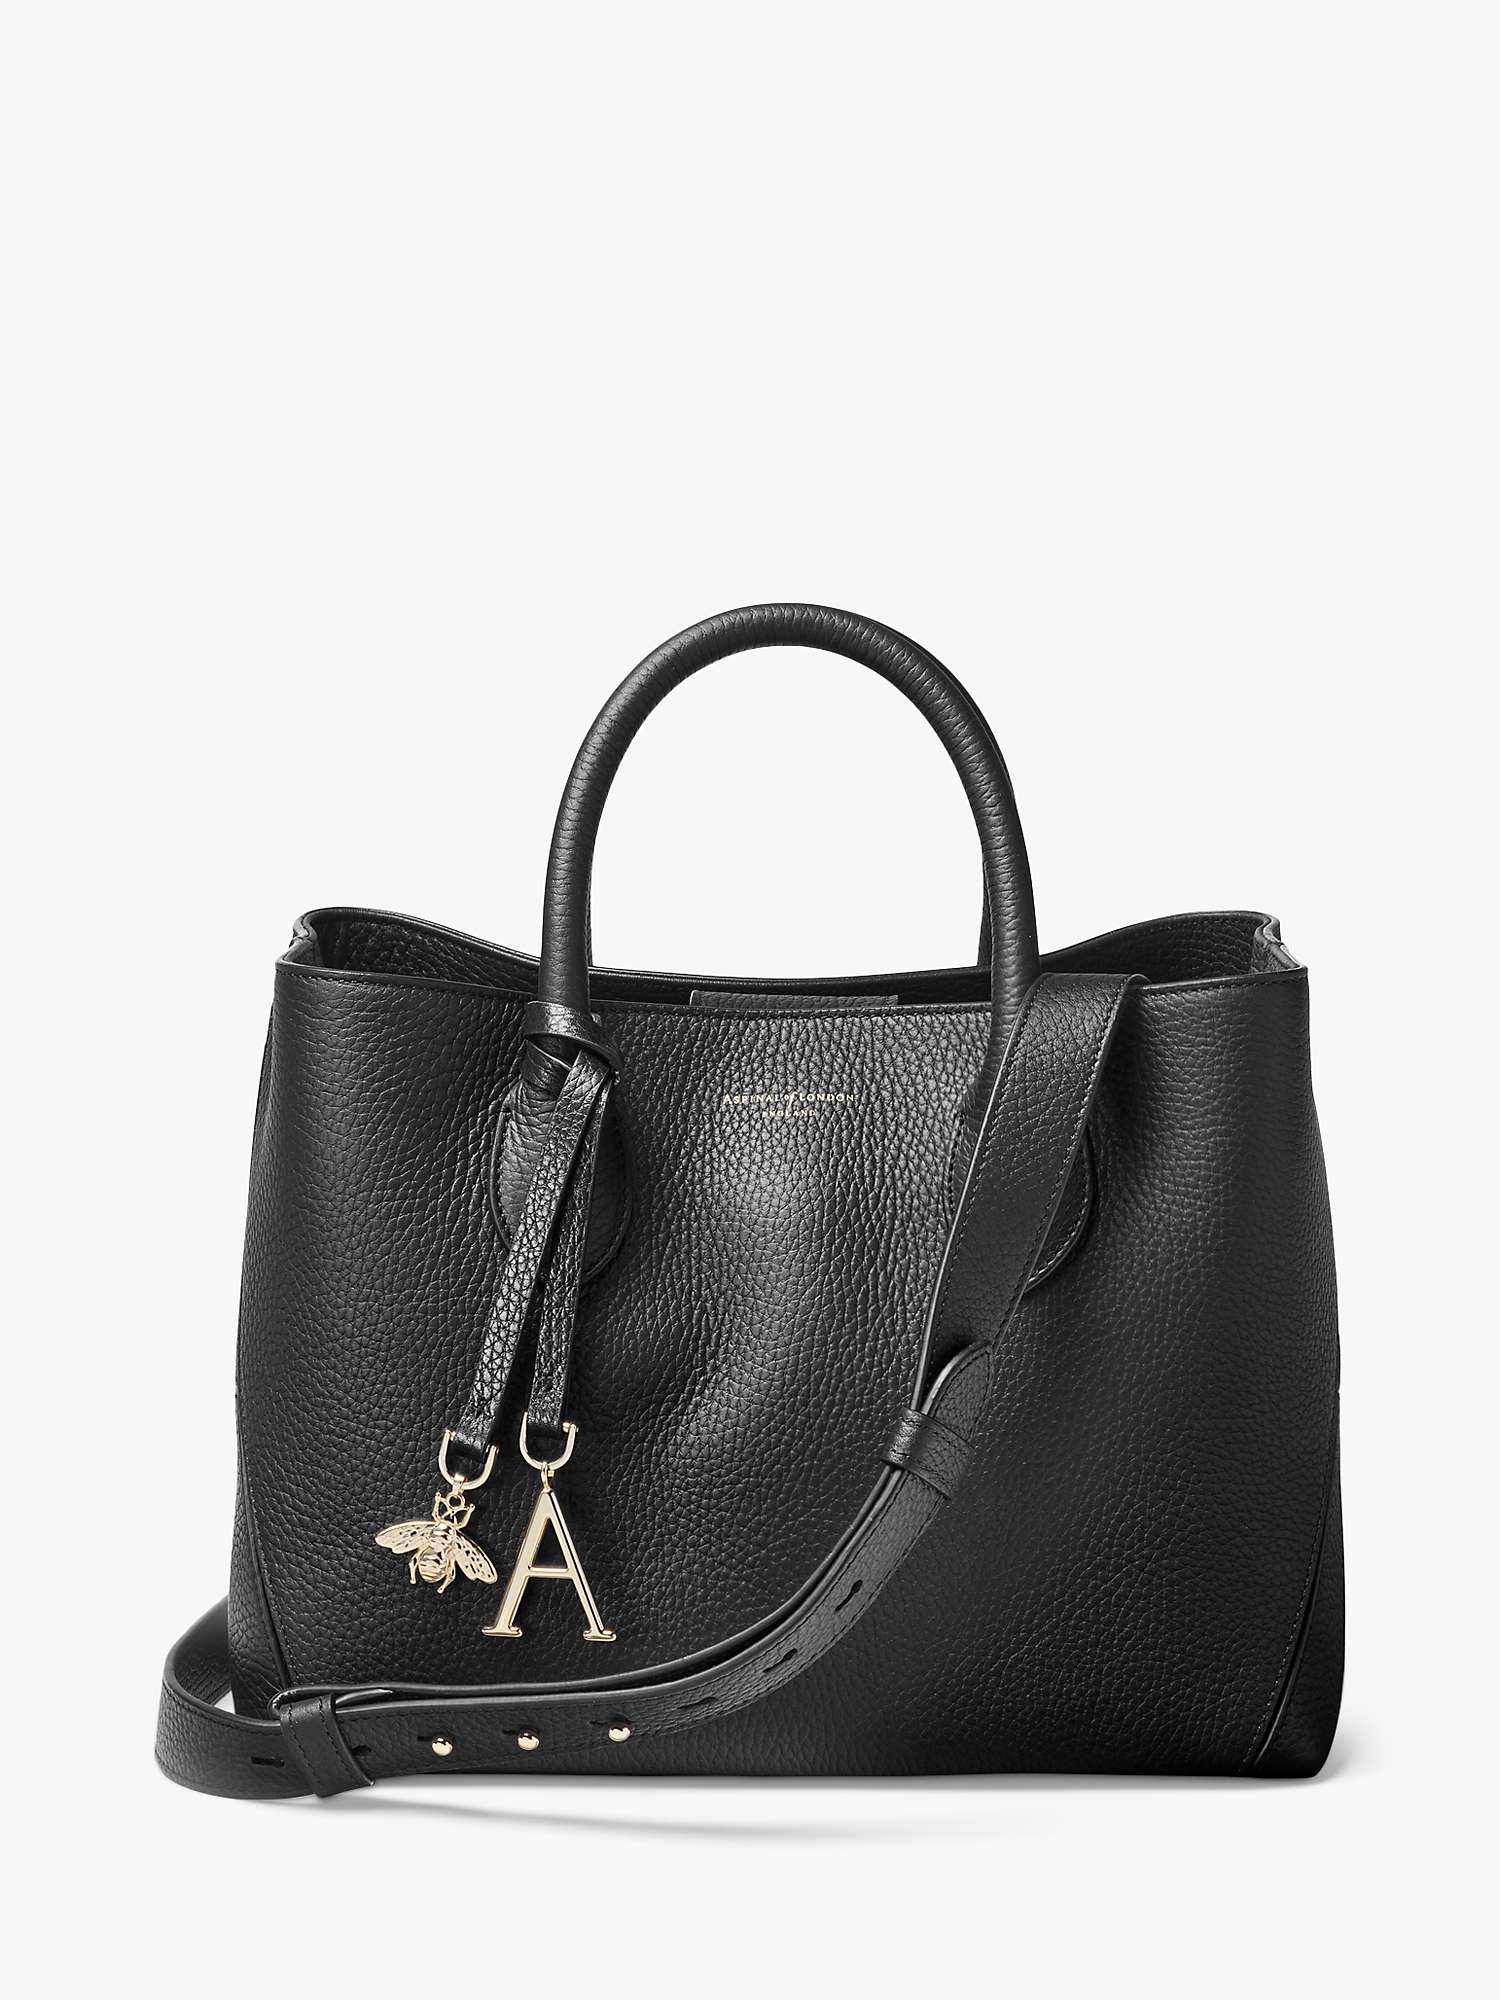 Buy Aspinal of London Midi London Pebble Leather Tote Bag Online at johnlewis.com